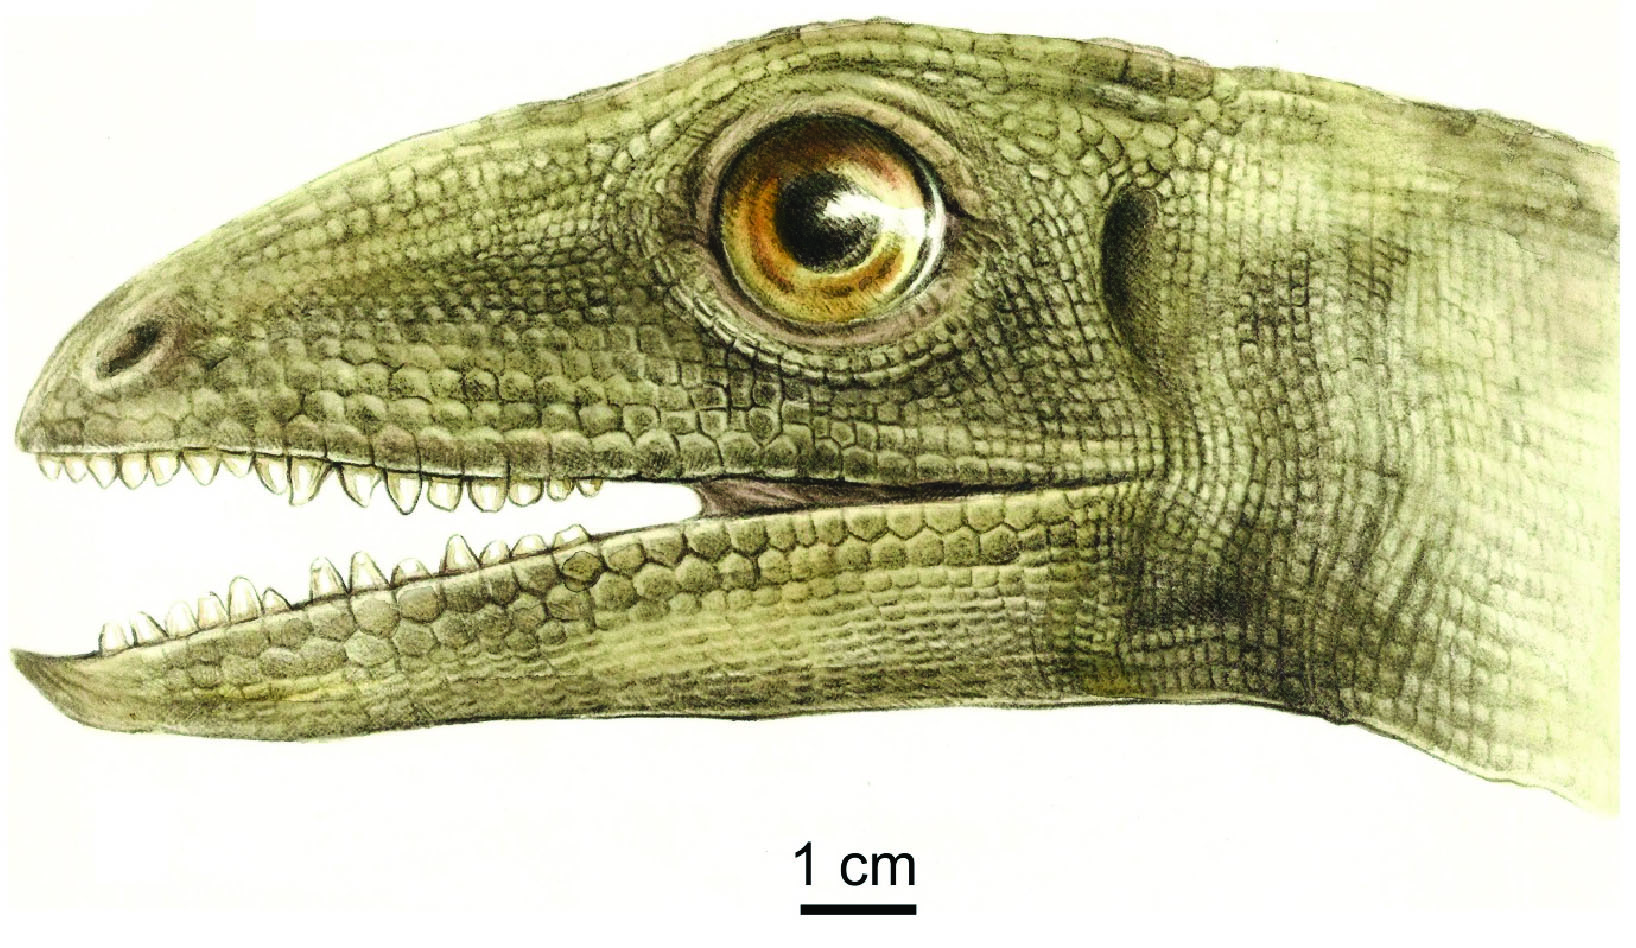 Artistic reconstruction of Silesaurus CREDIT Małgorzata Czaja